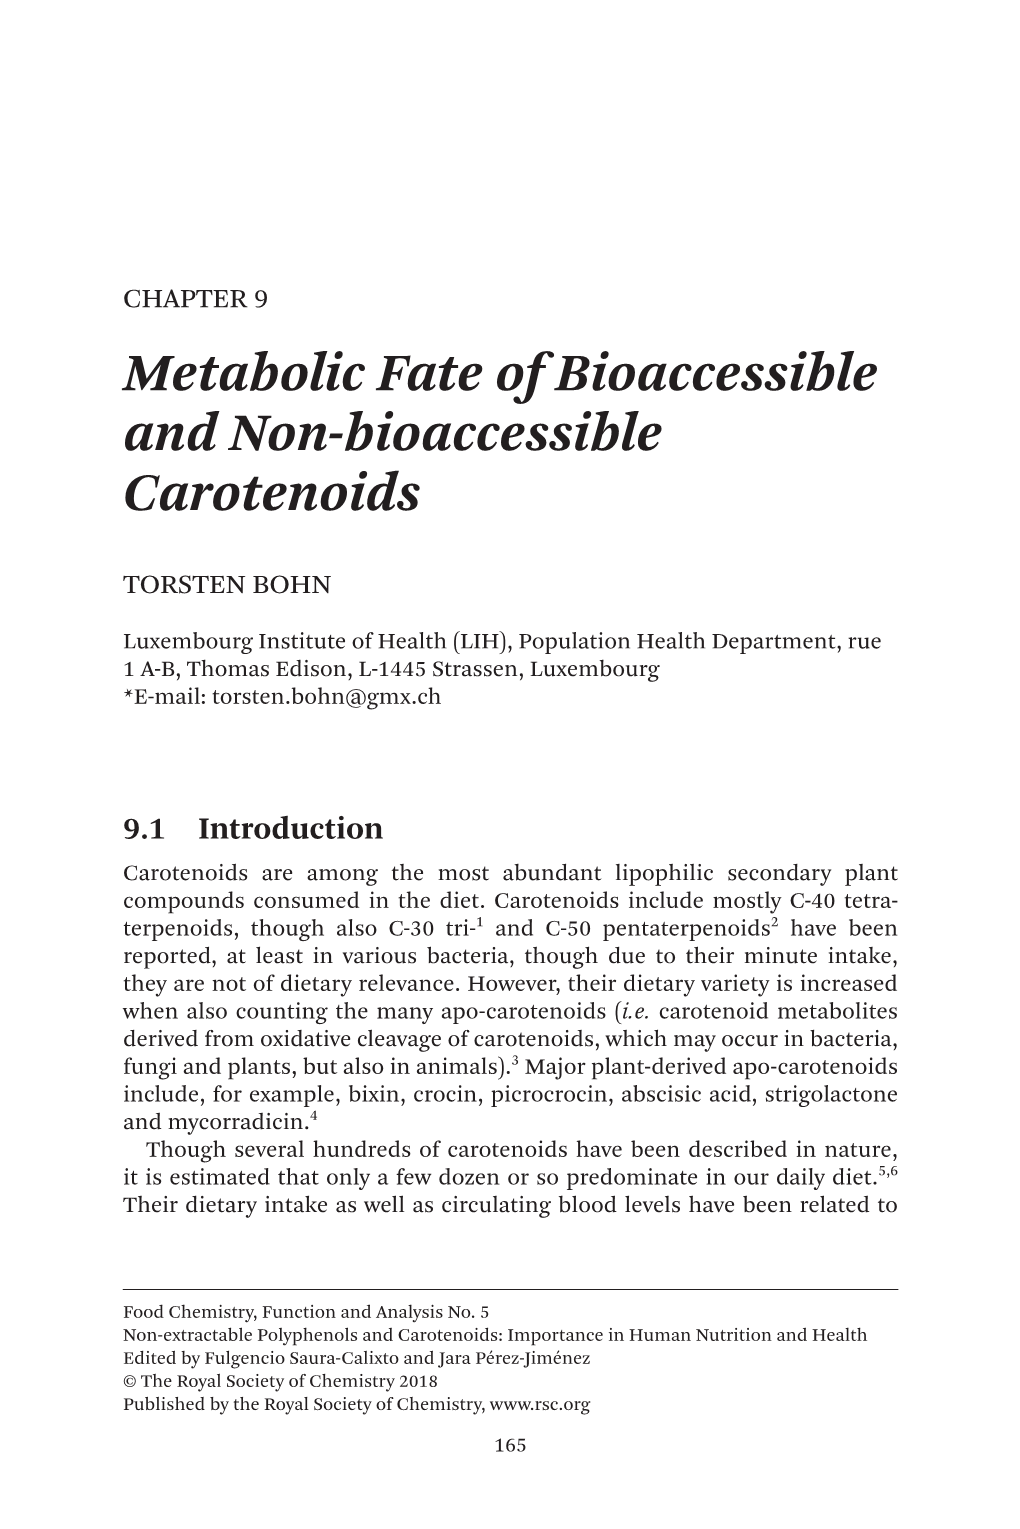 Metabolic Fate of Bioaccessible and Non-Bioaccessible Carotenoids